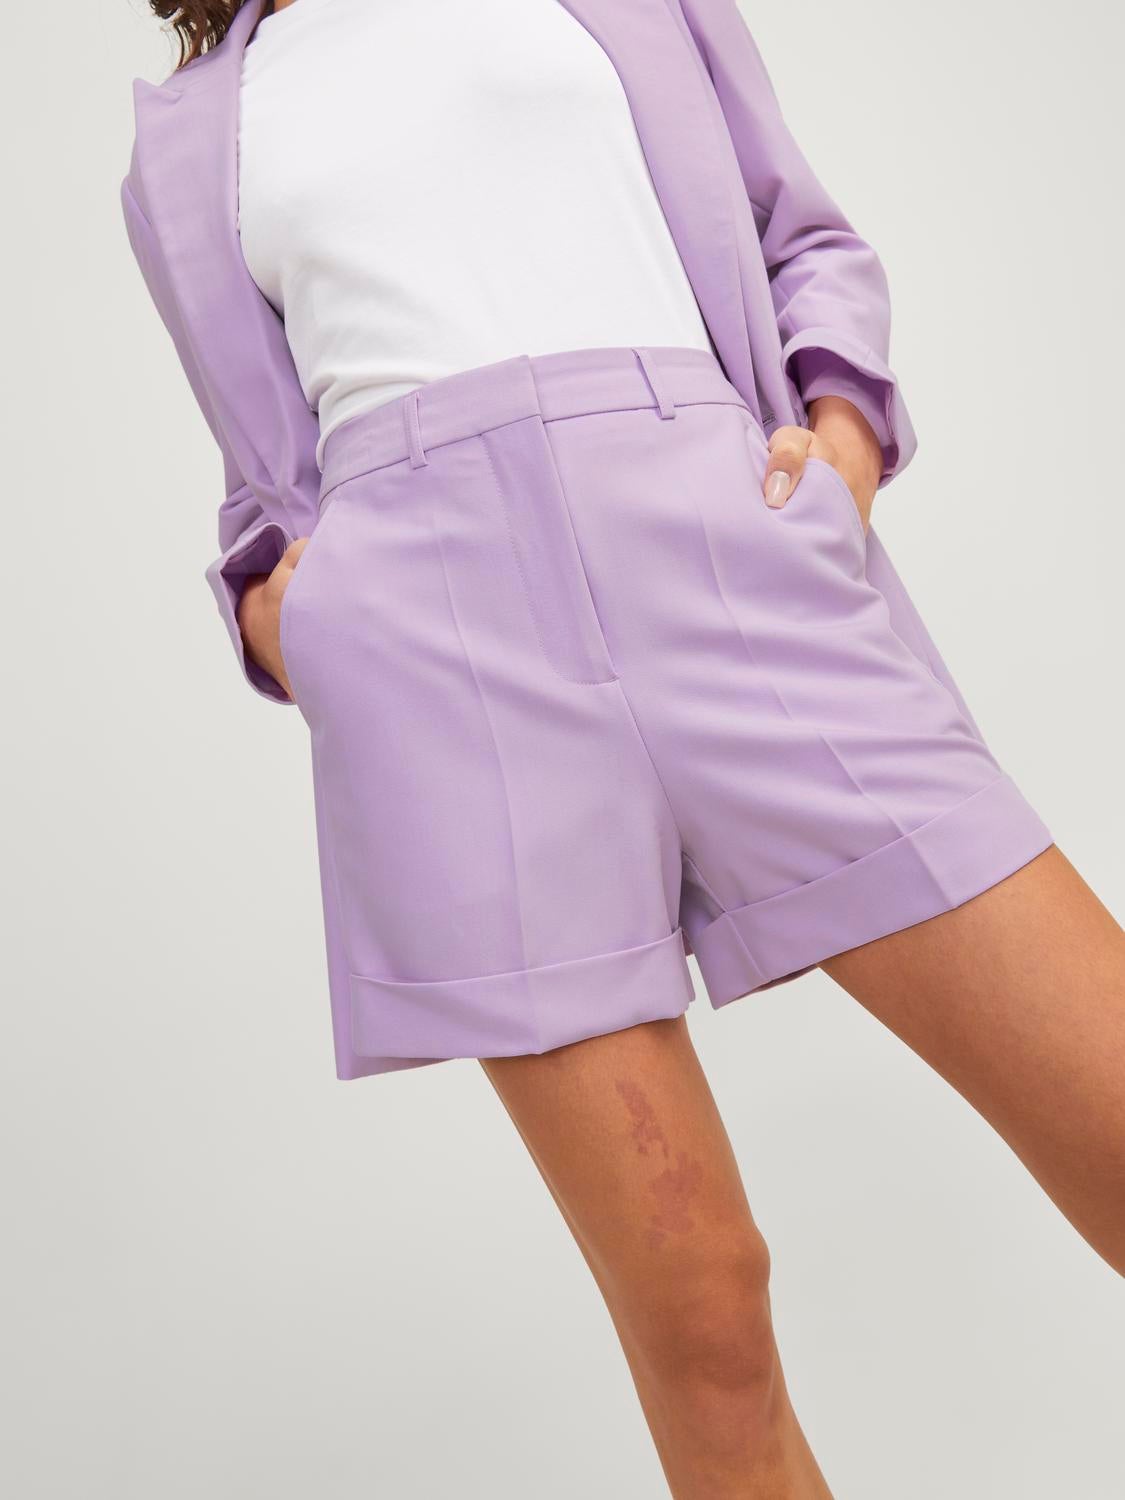 8 by Yoox Sequin Shorts Woman Shorts & Bermuda Shorts Purple Size 8 POLYESTER, Elastane